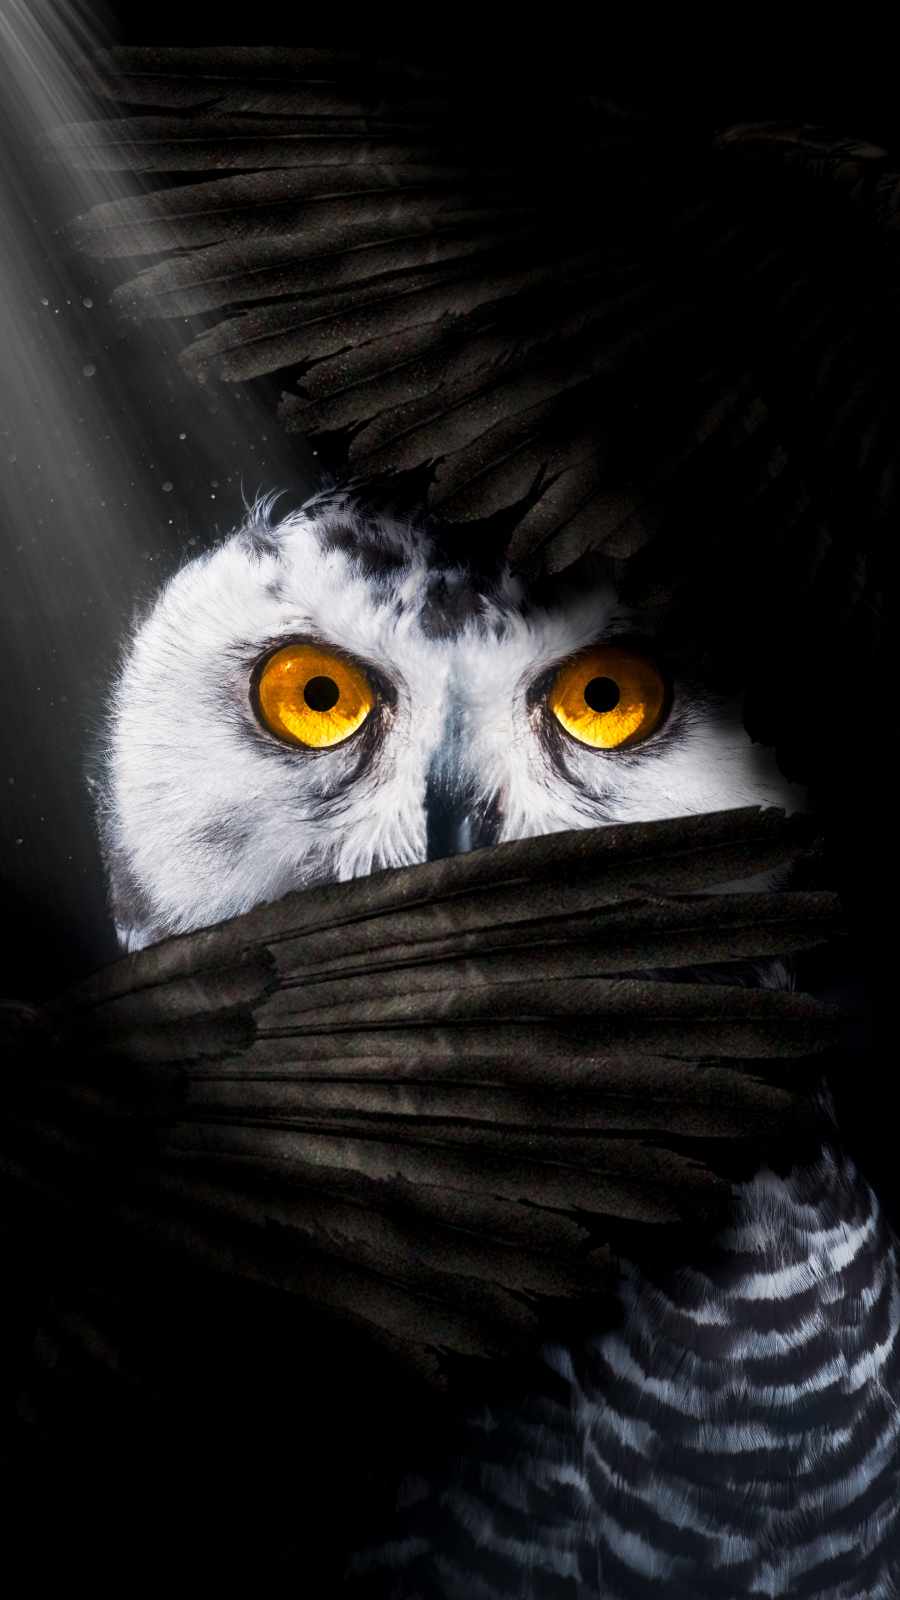 Owl Eyes IPhone Wallpaper Wallpaper, iPhone Wallpaper